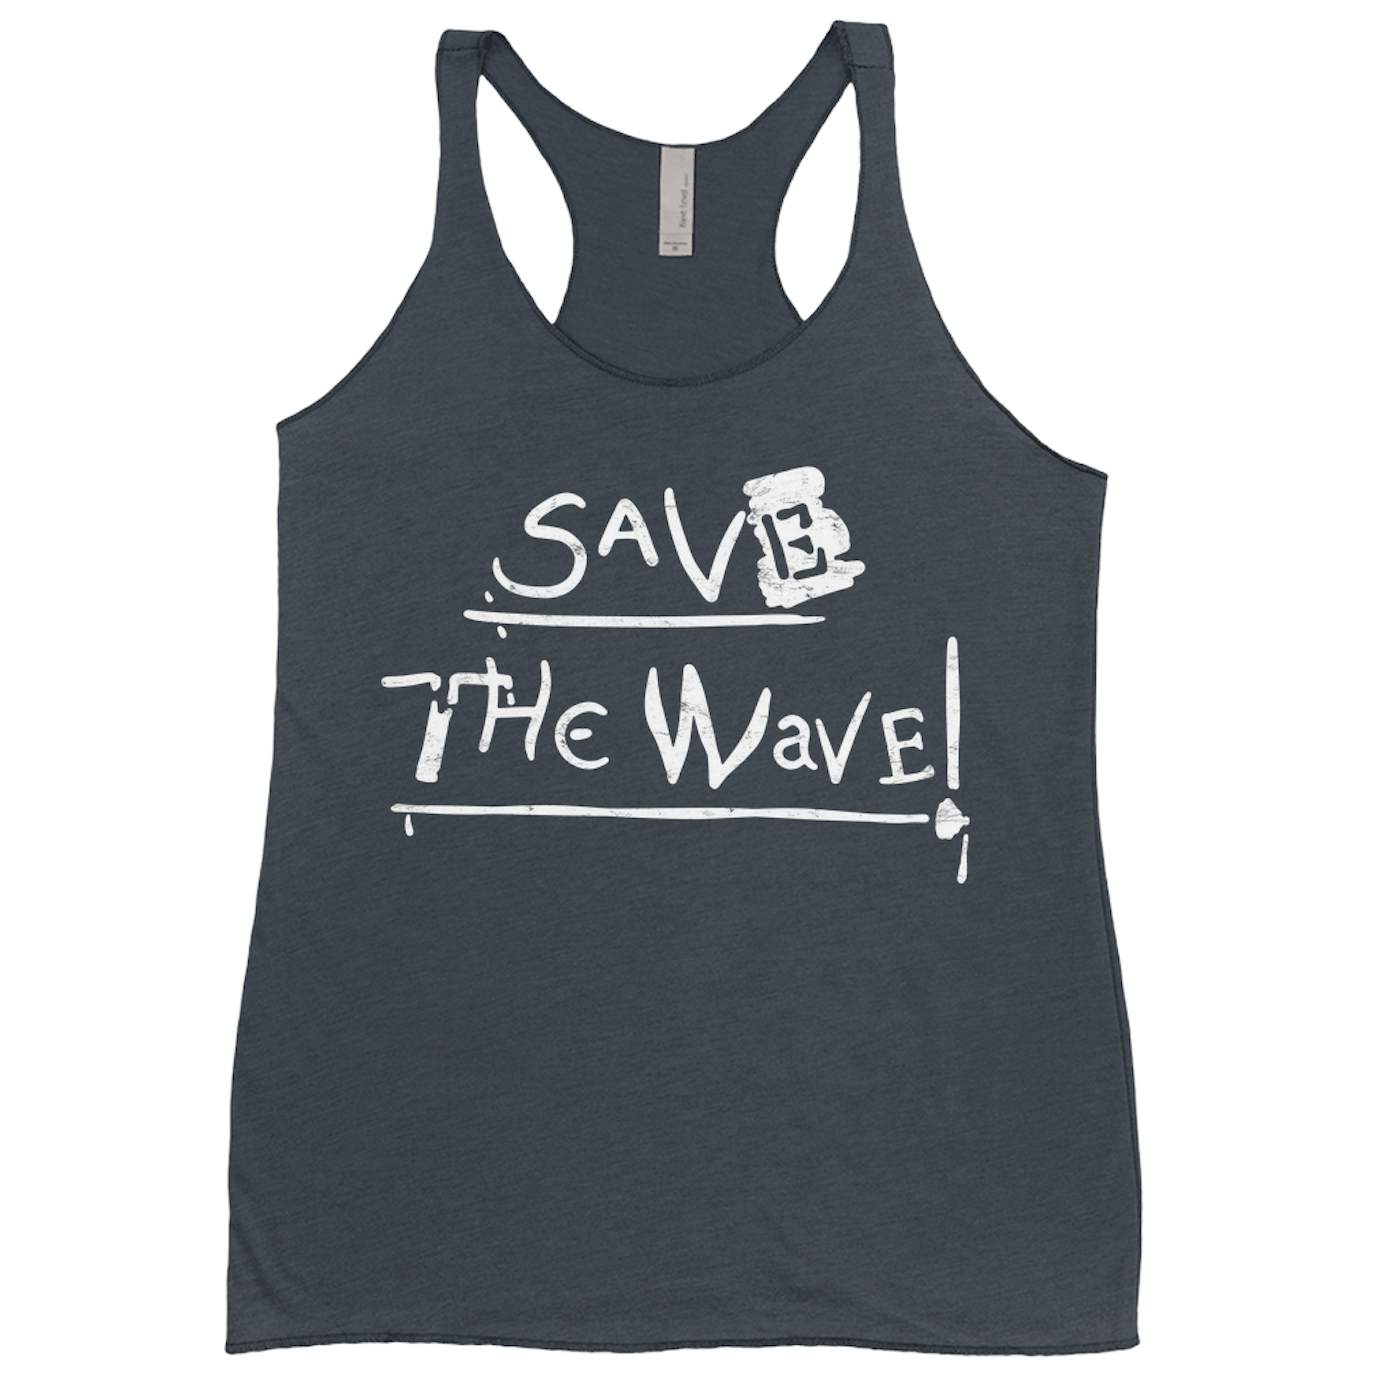 Joan Jett & the BlackheartsLadies' Tank Top | Save The Wave Worn By Joan Jett And The Blackhearts Shirt